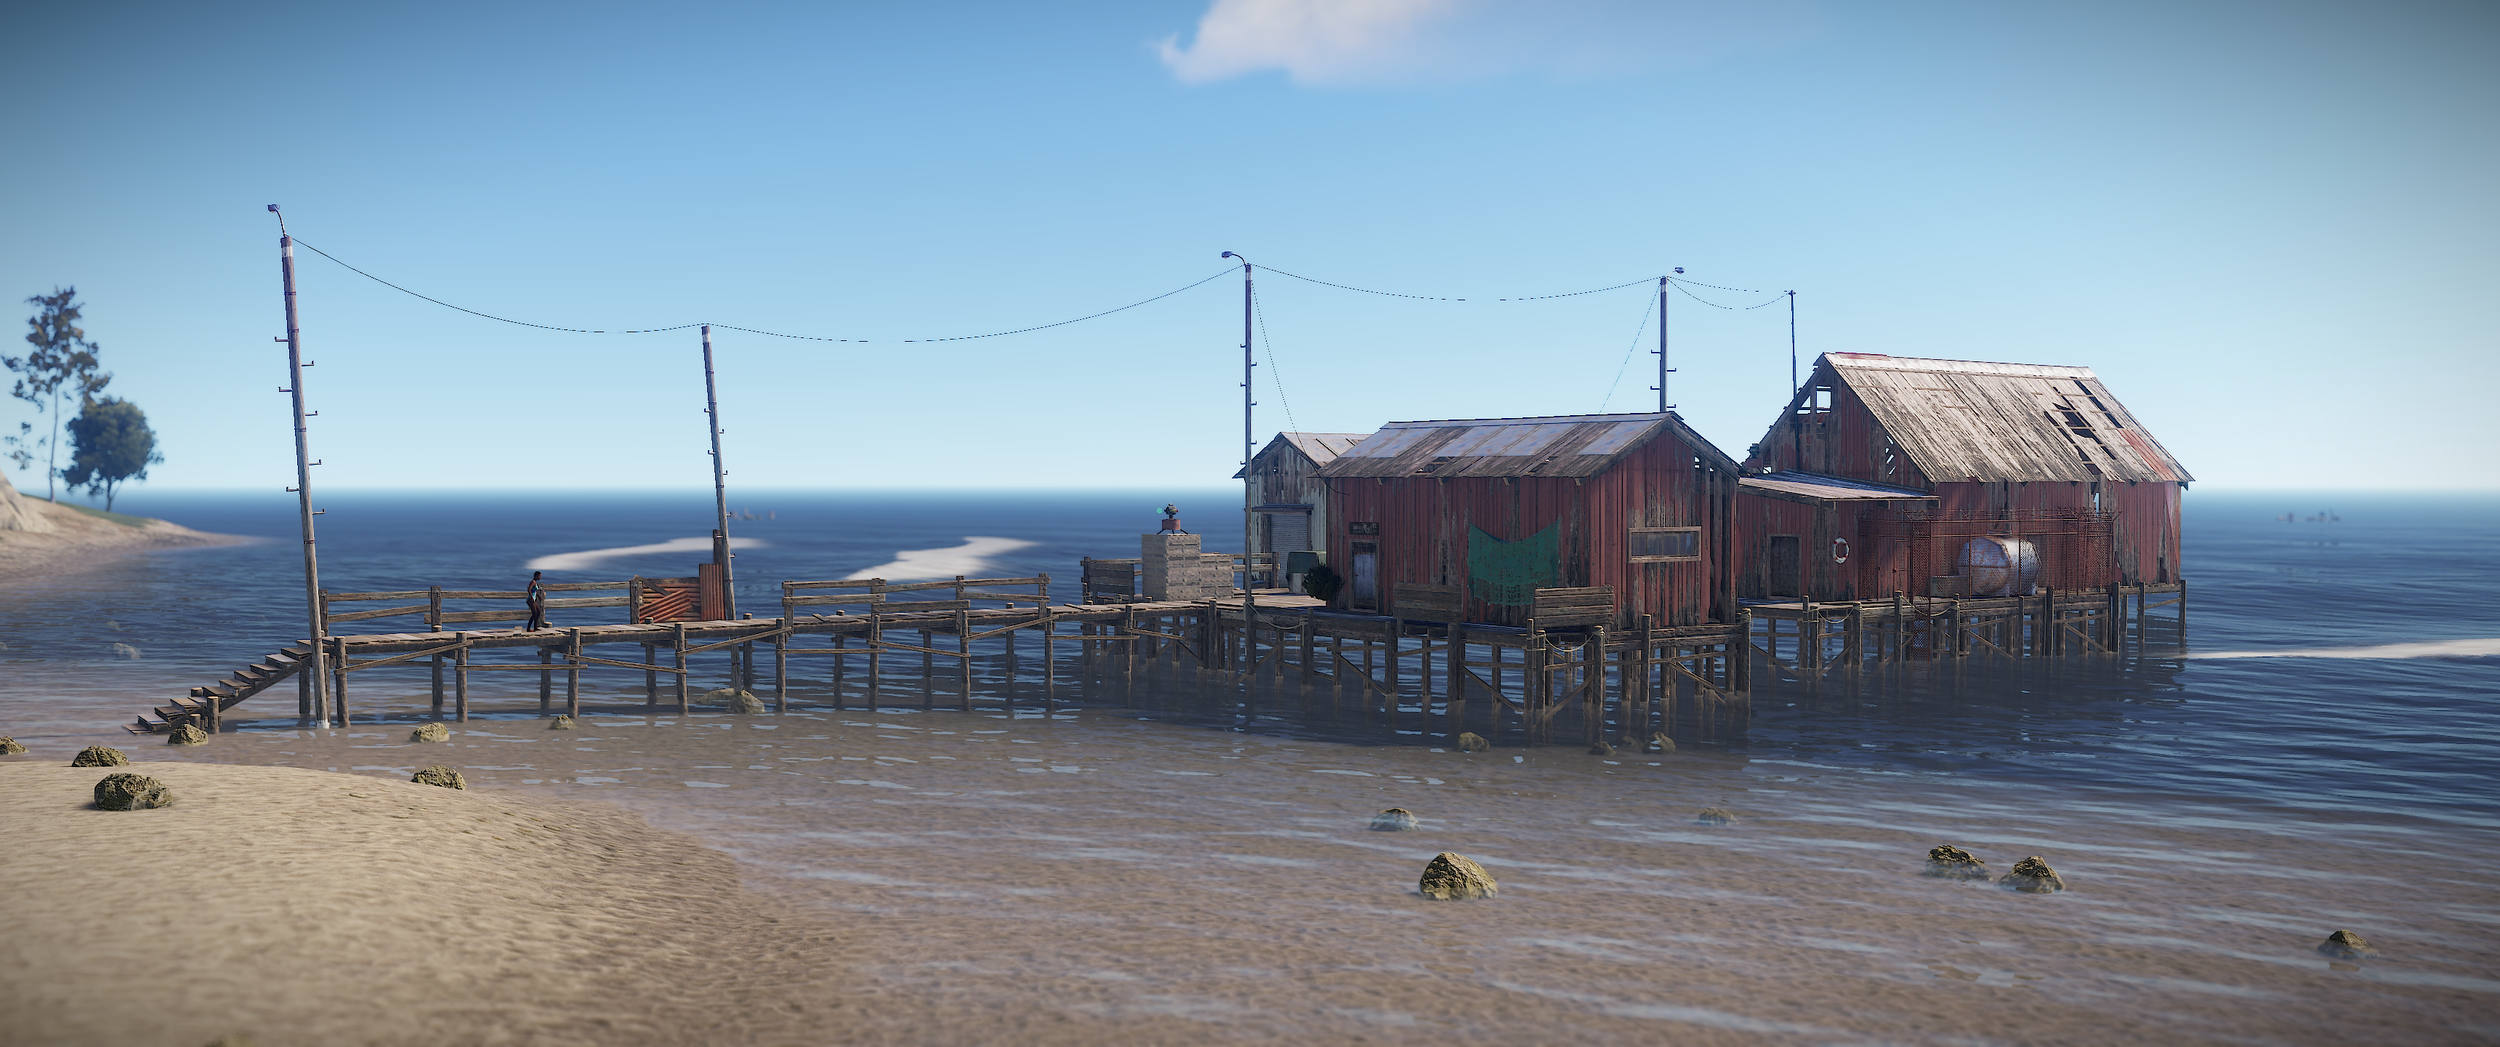 Fishing Village reference